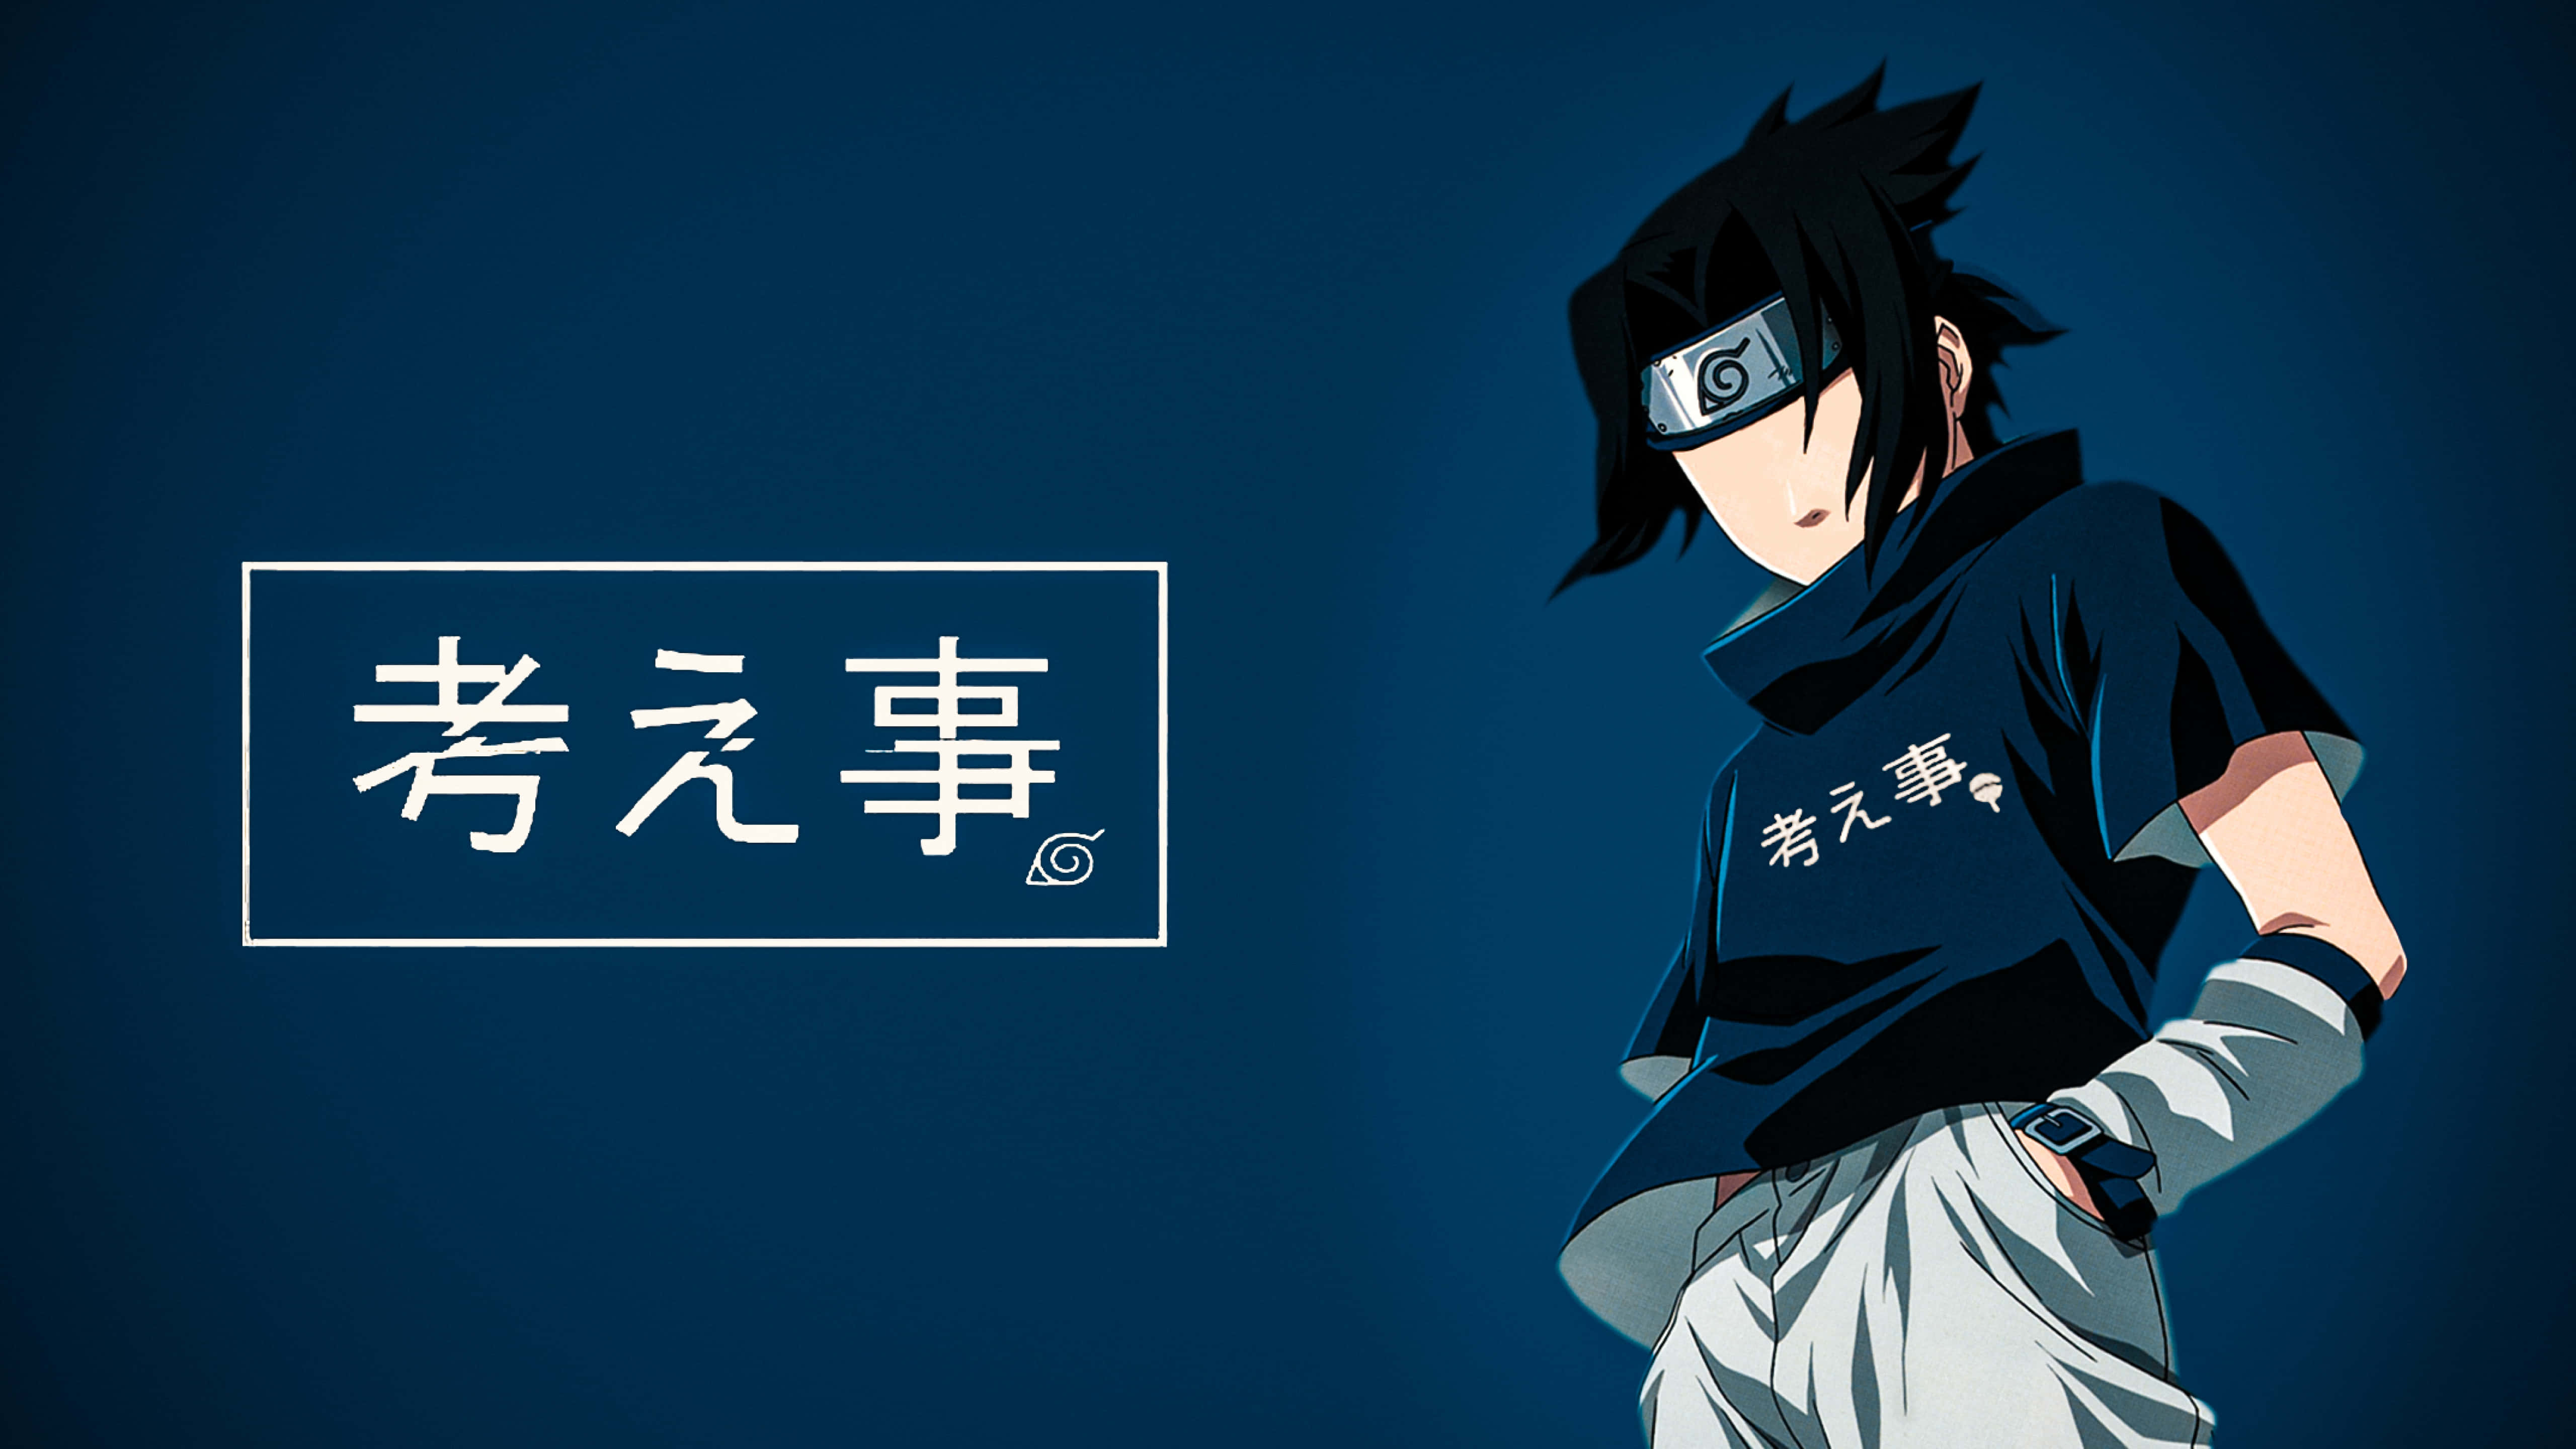 Blue Sasuke Breathing Fire - A Dynamic Anime Character Wallpaper